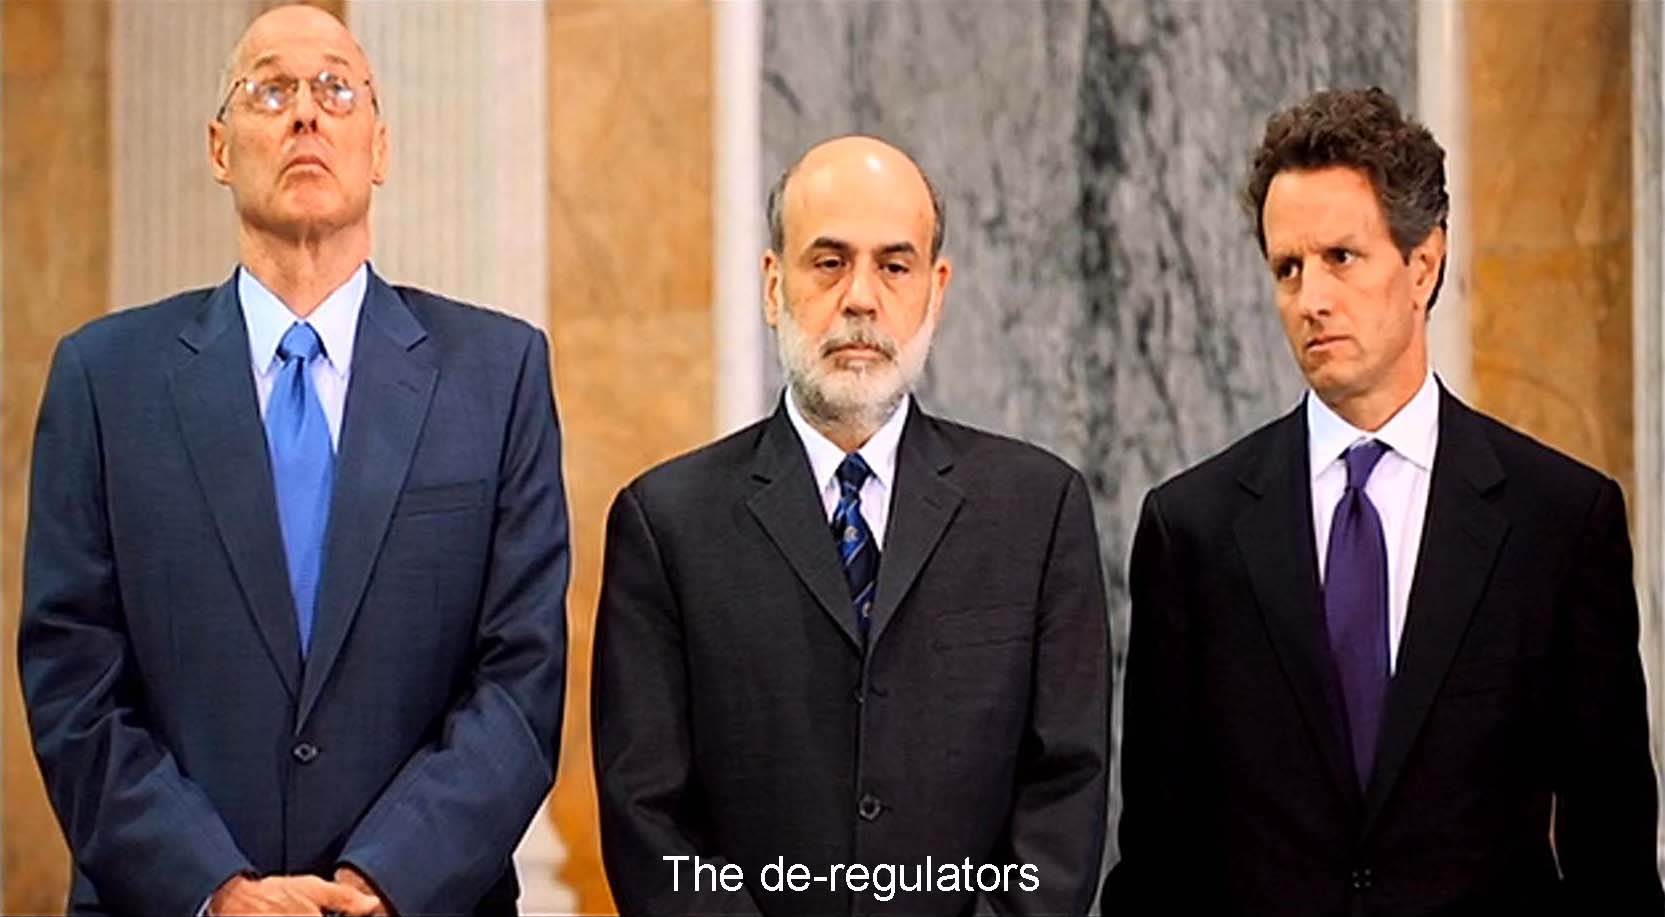 The de-regulators